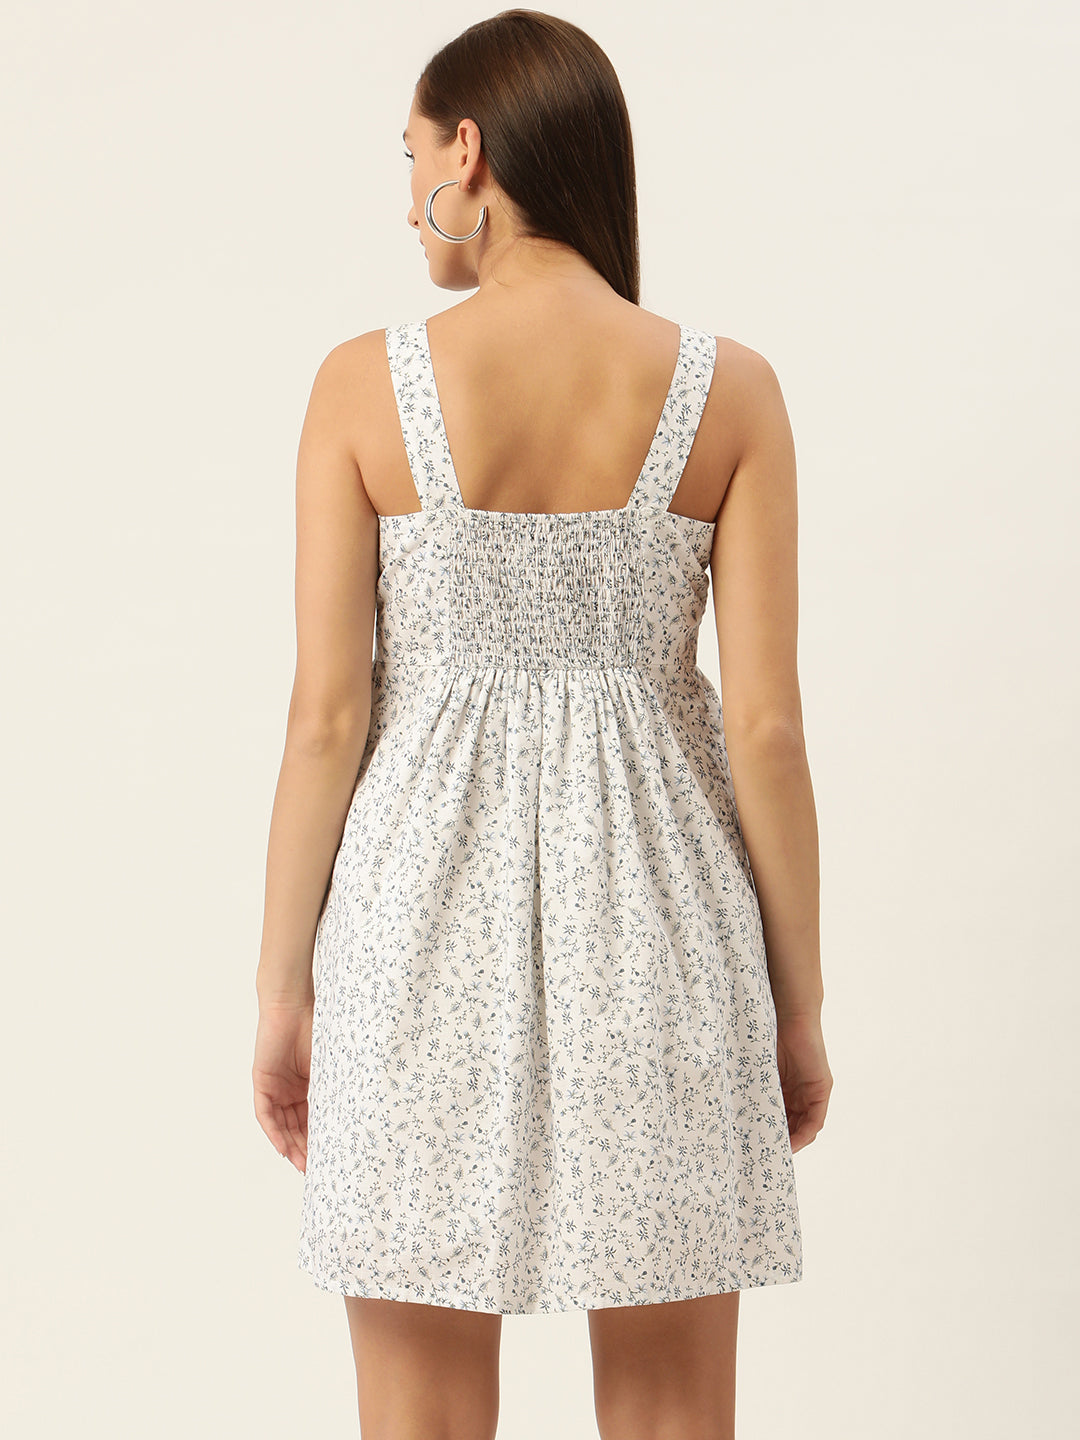 Off White & Blue Floral A-Line Dress